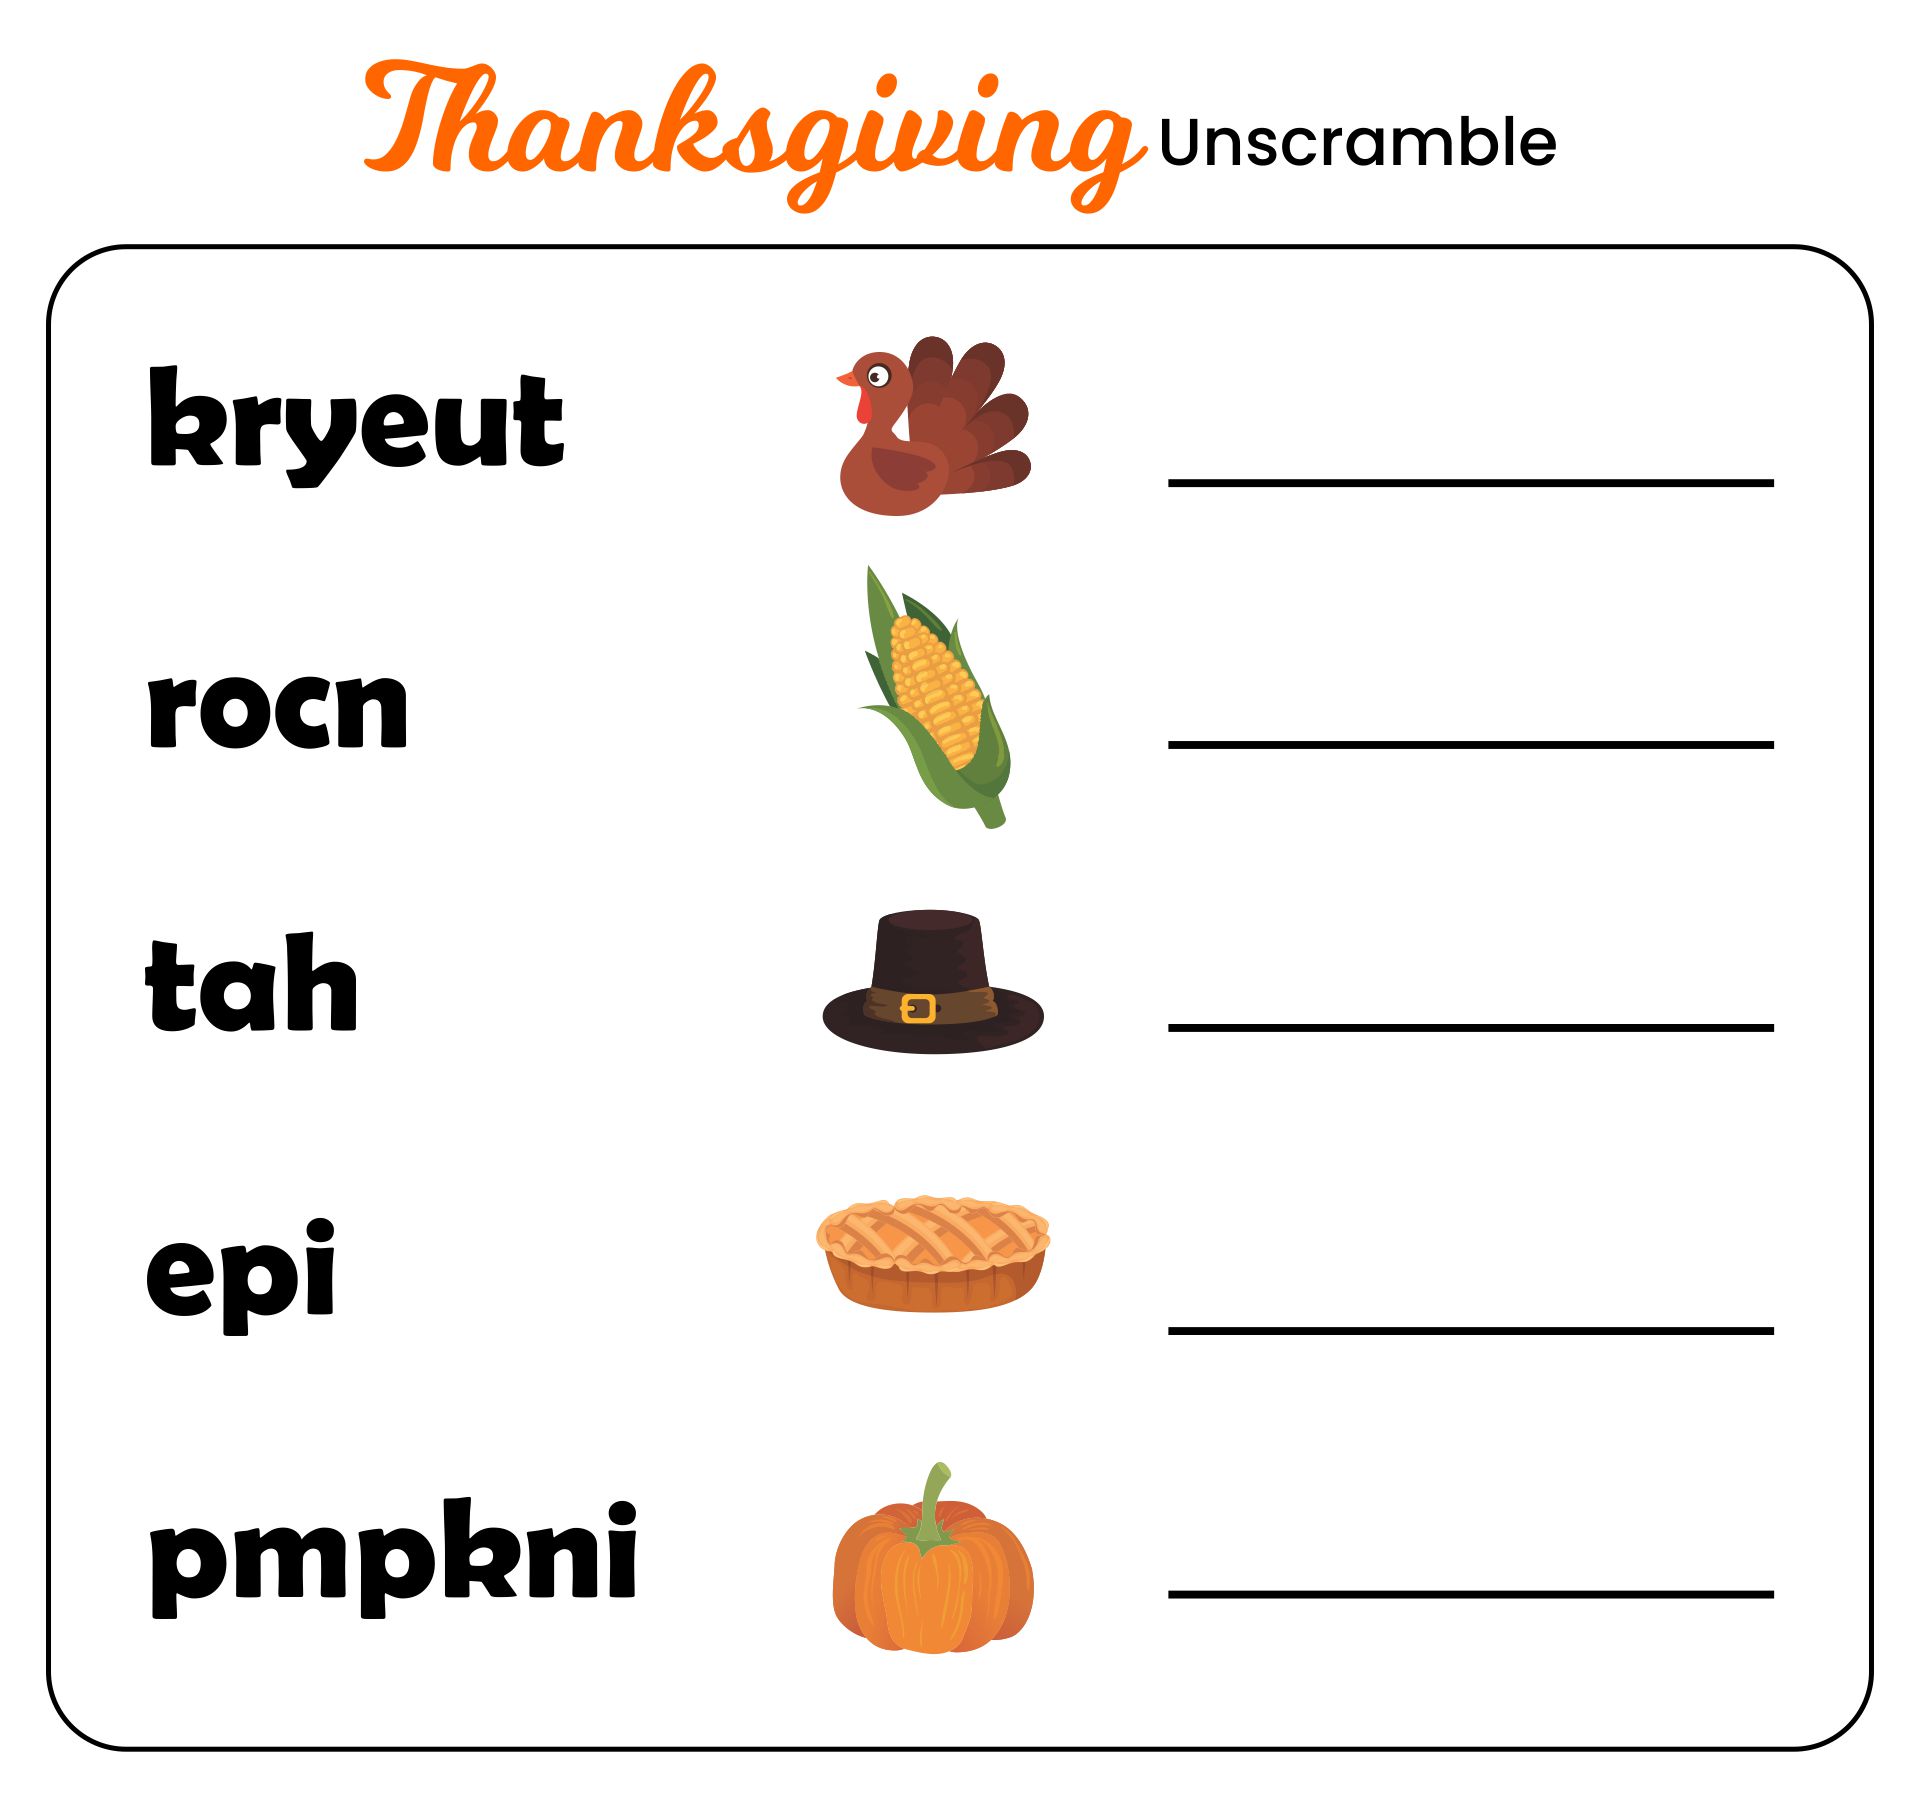 Preschool Thanksgiving Printables